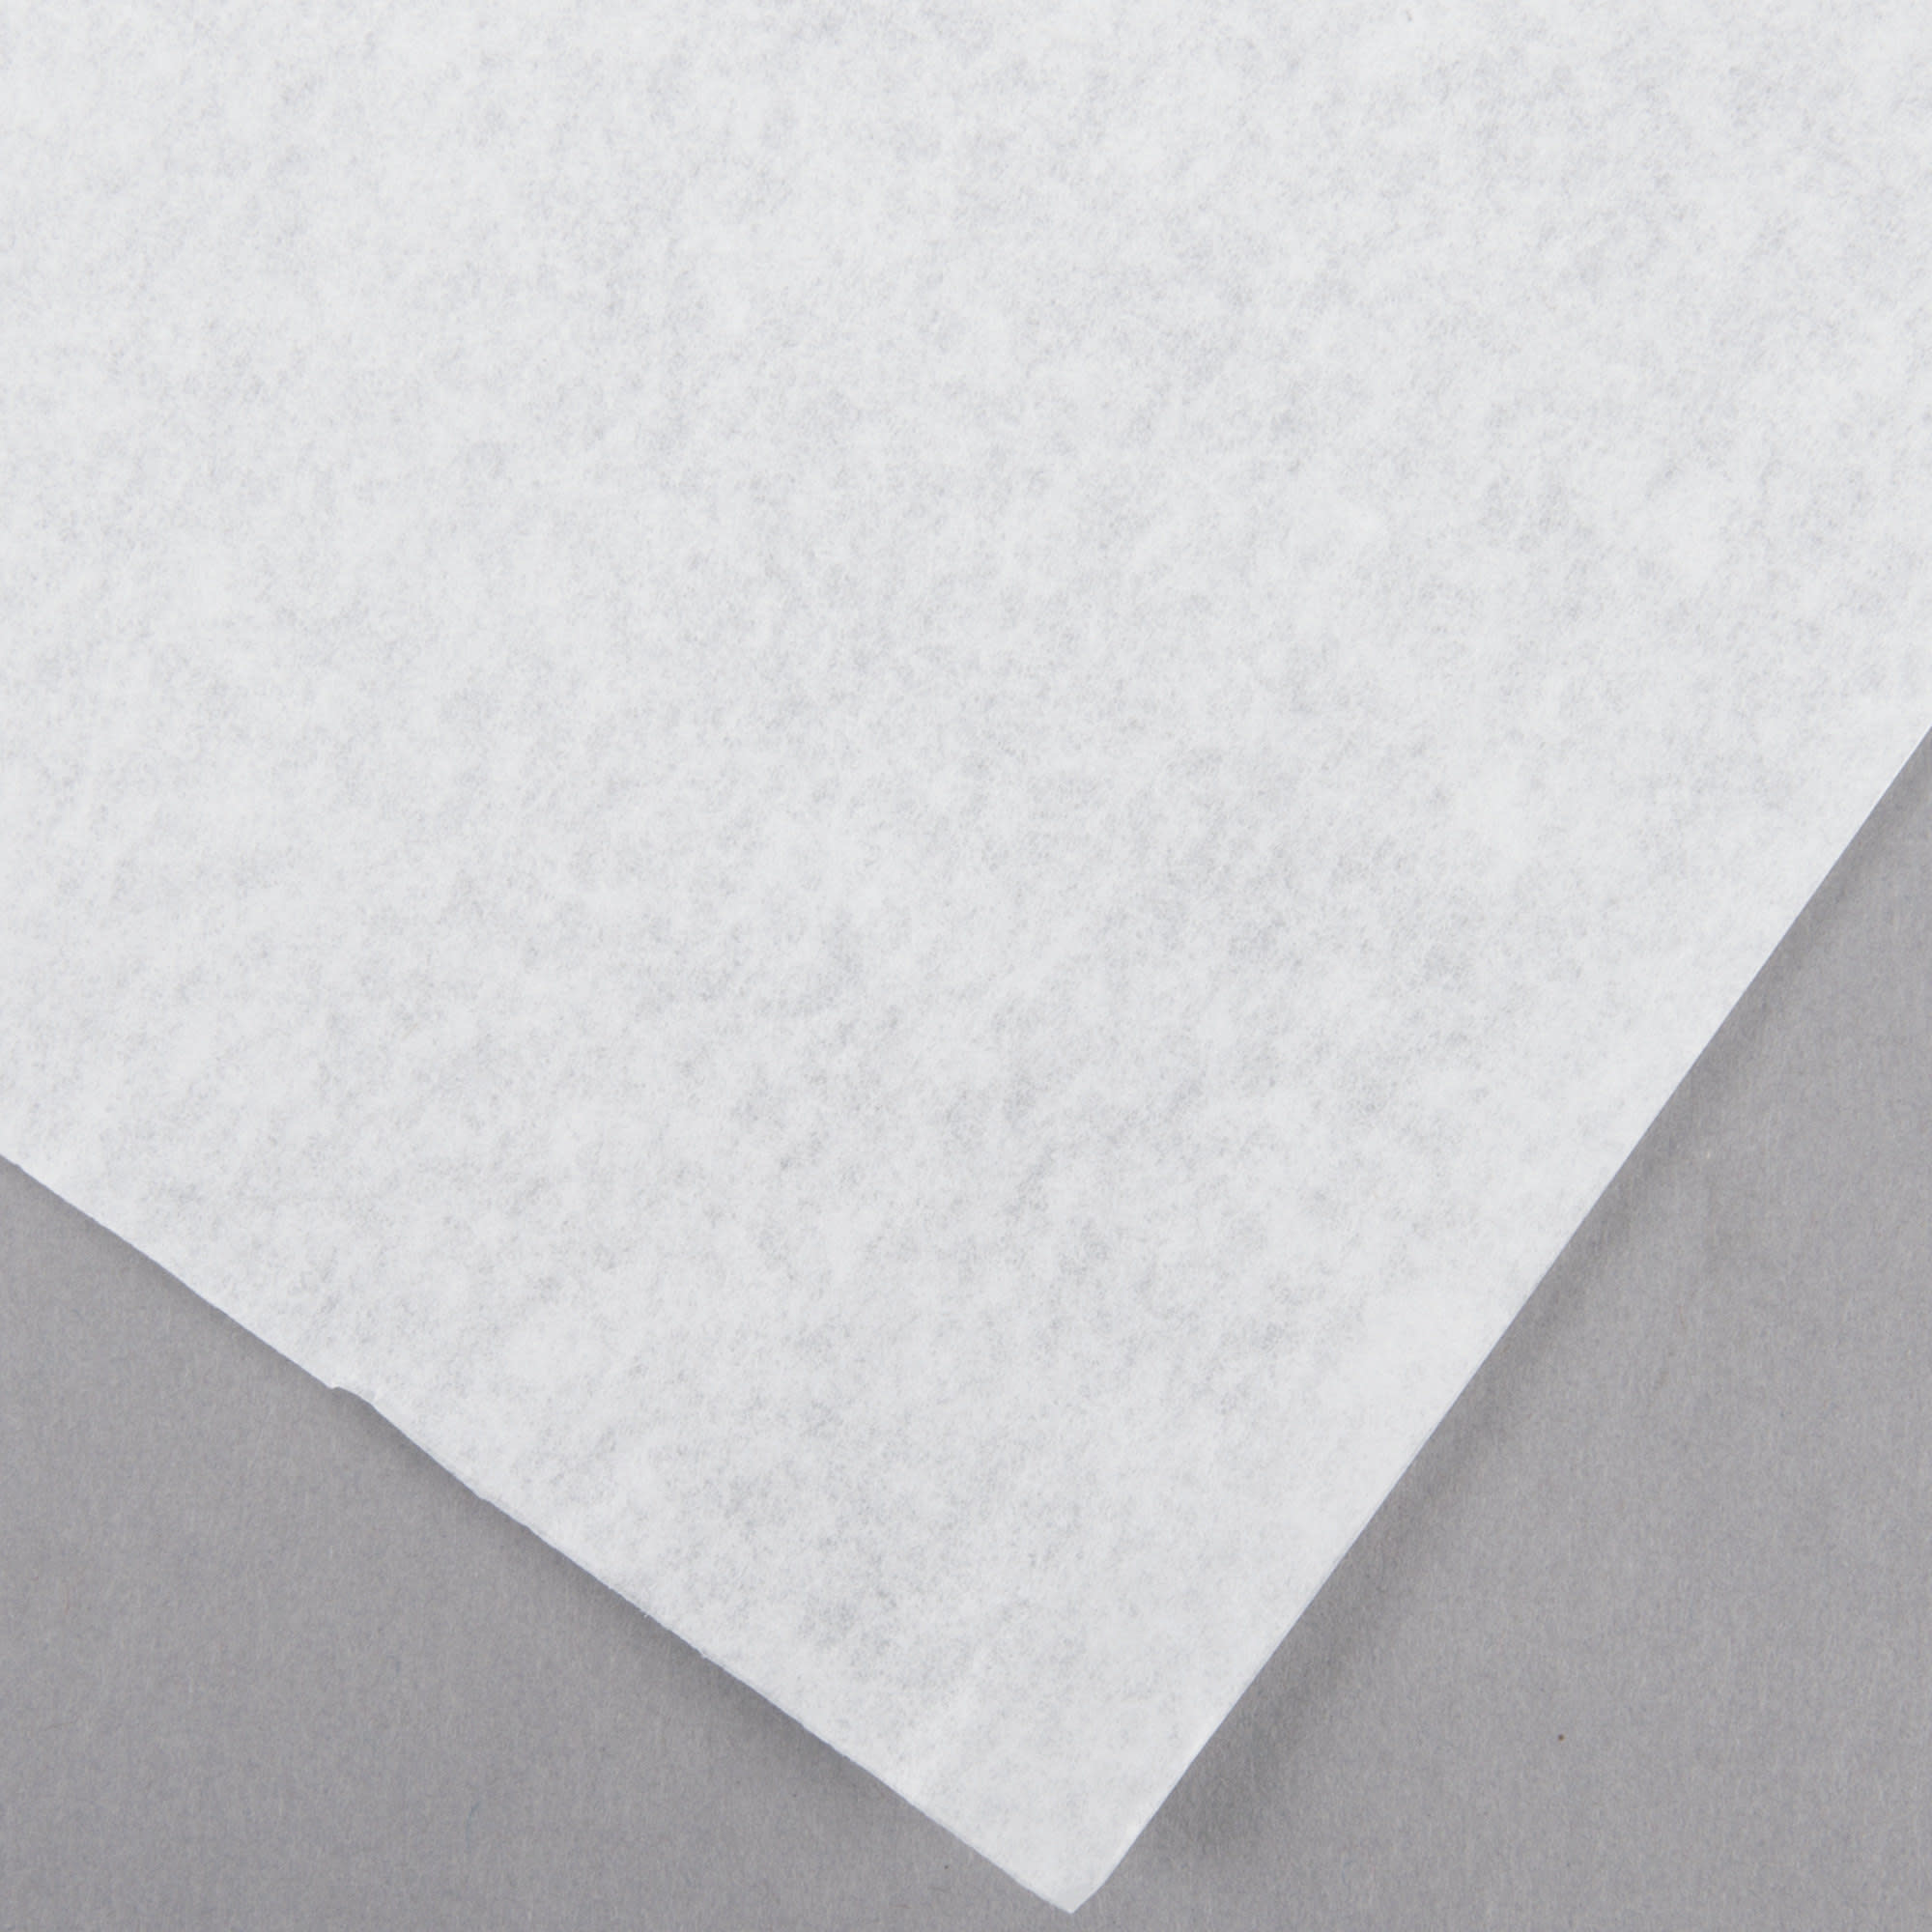 parchment sheets, s/100 half sheet BACKUP - Whisk